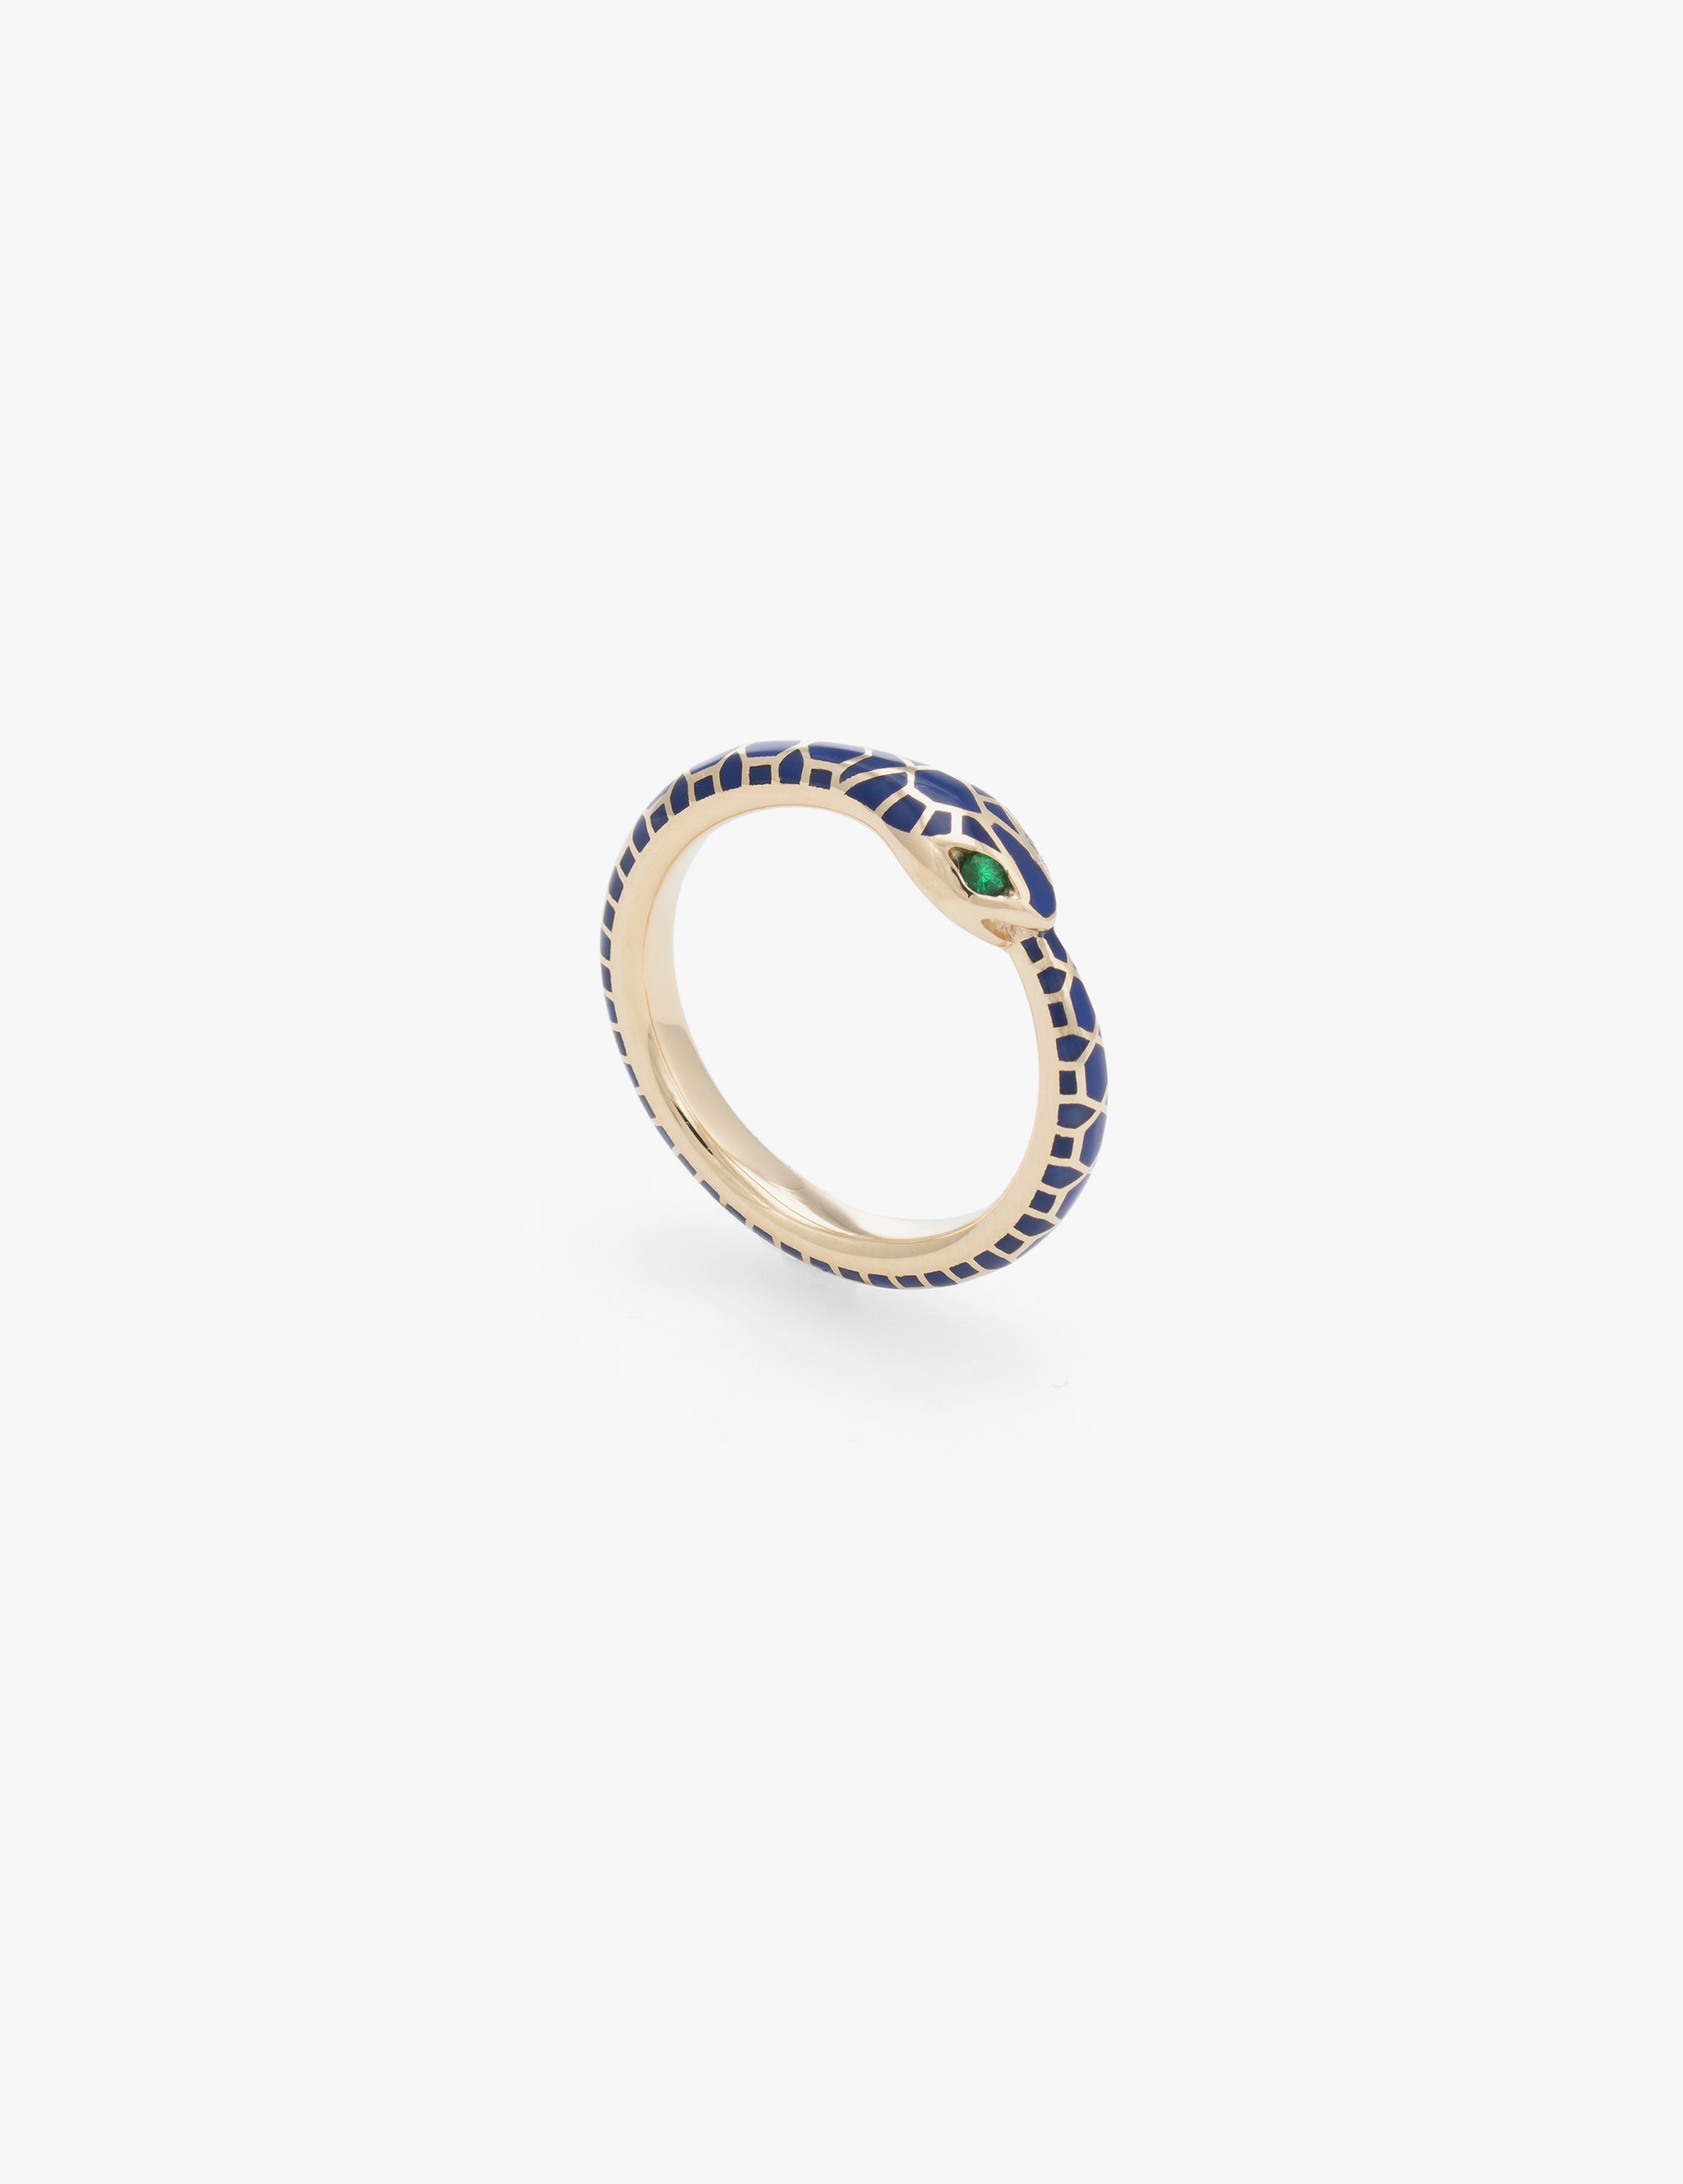 Blue Enamel Ouroboros Ring with Emerald Eyes